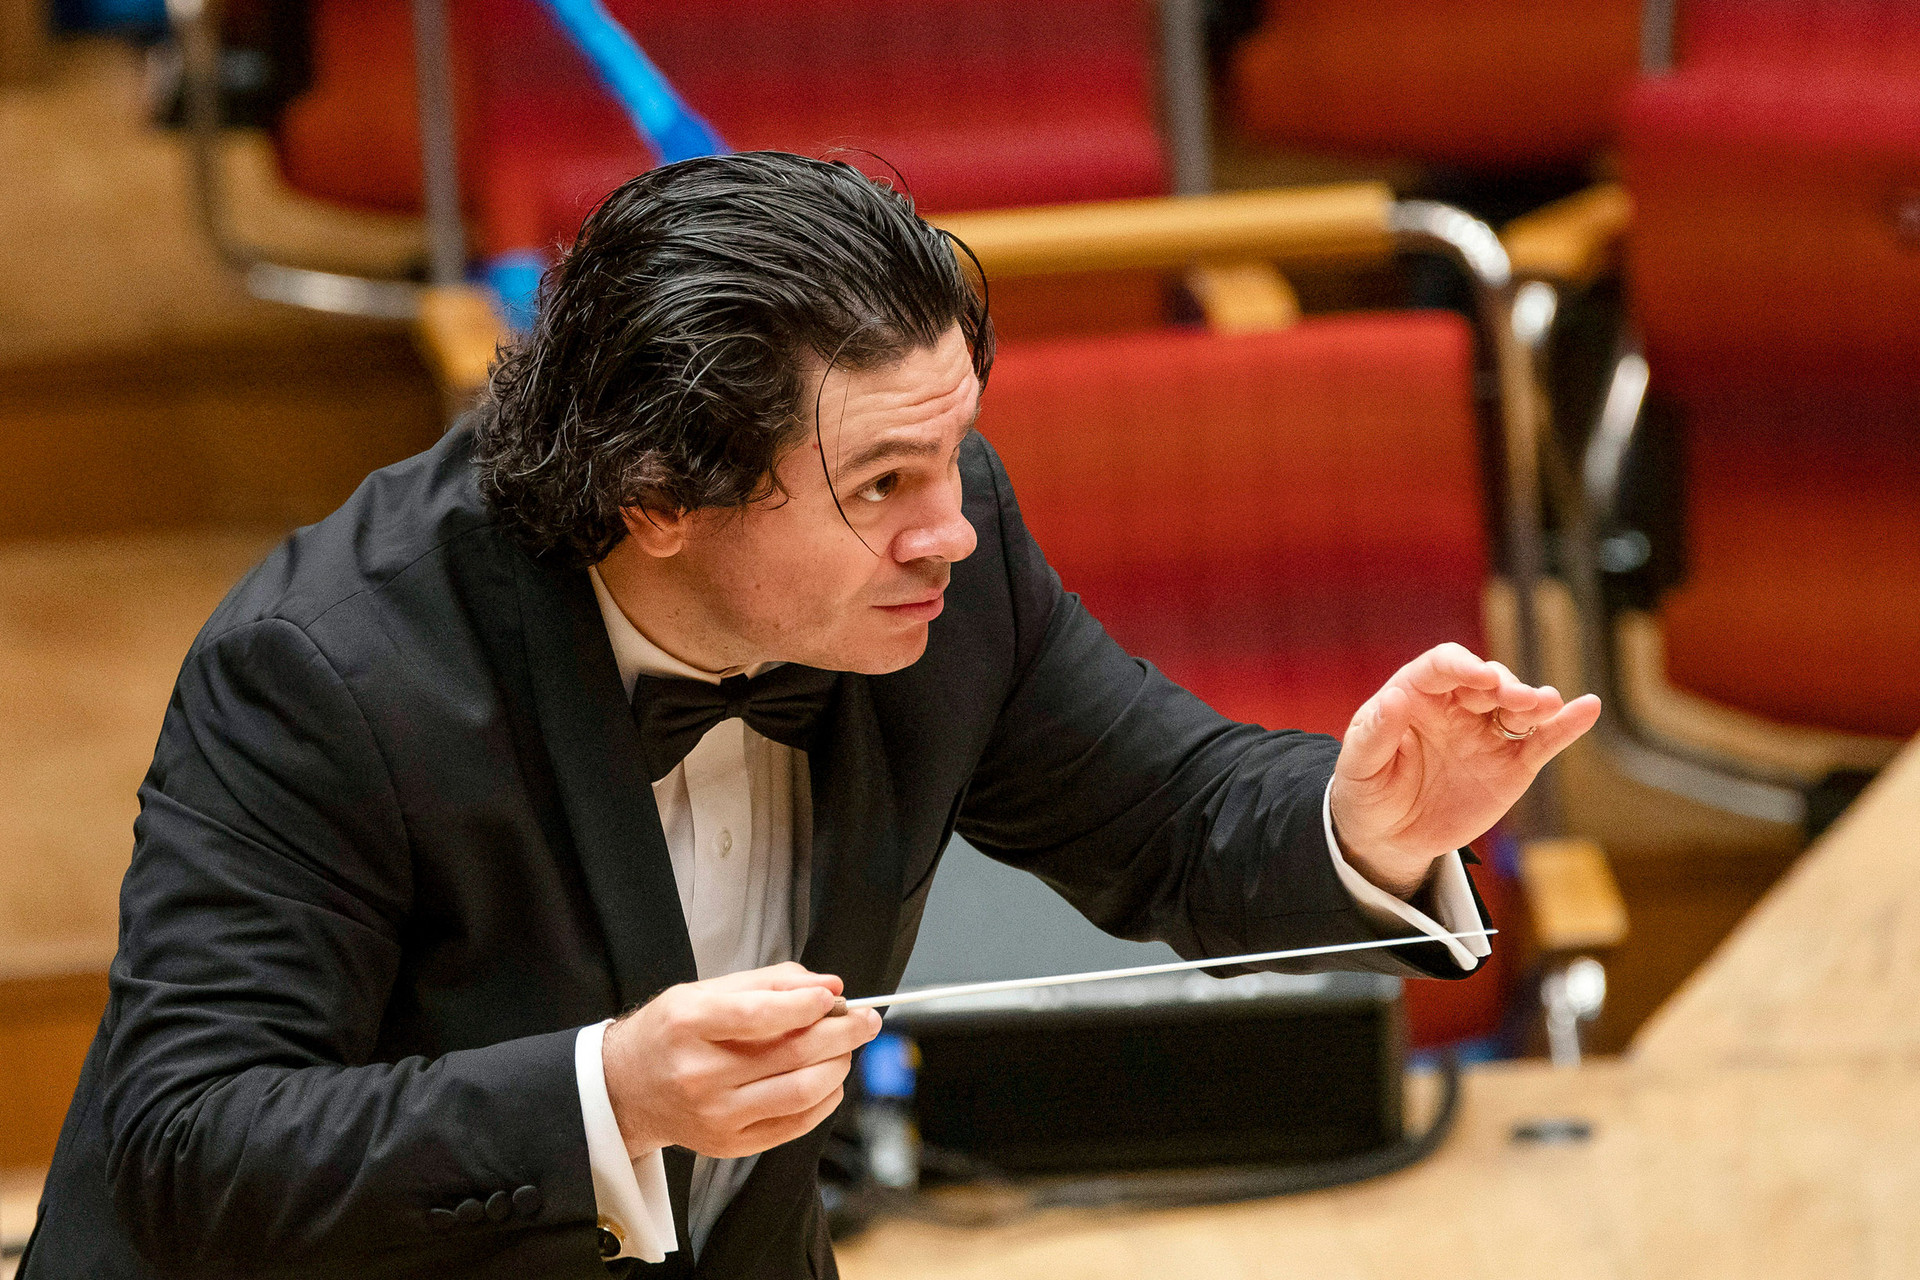 Chefdirigent des WDR Sinfonieorchesters: Cristian Măcelaru © ZDF/WDR/Thomas Kost

